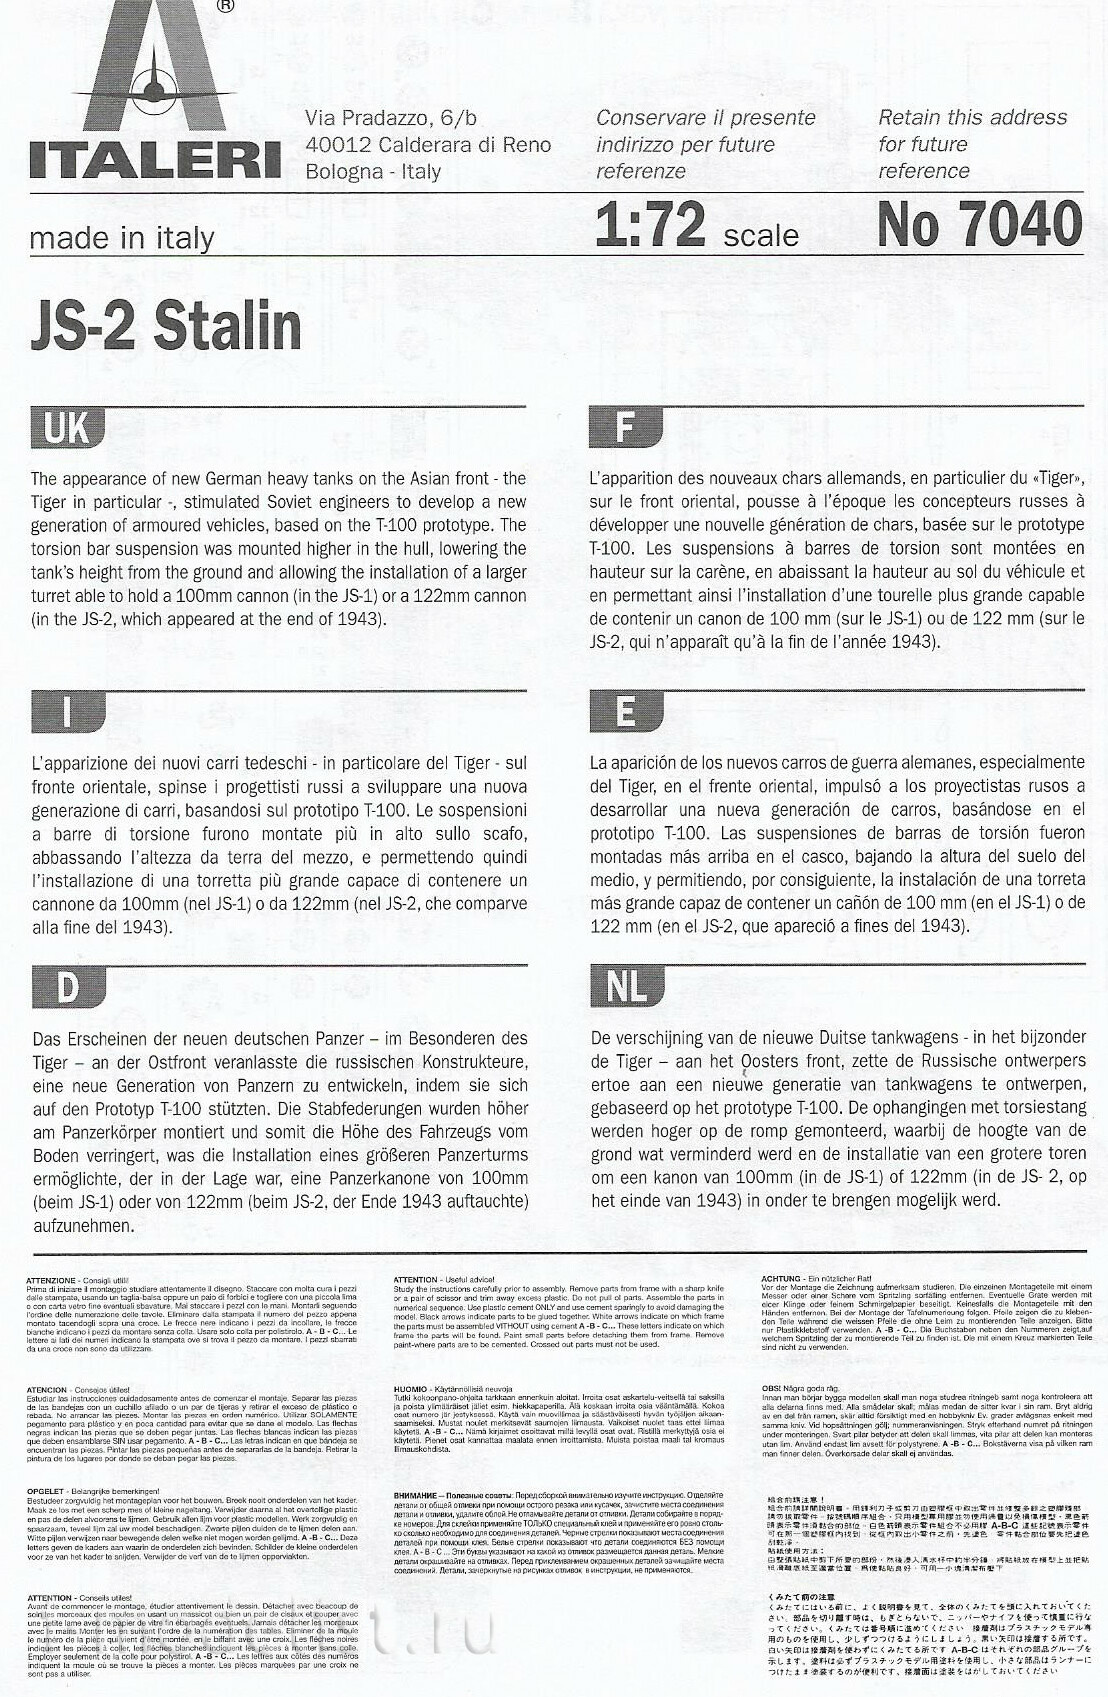 7040 Italeri 1/72 Js-2m Stalin